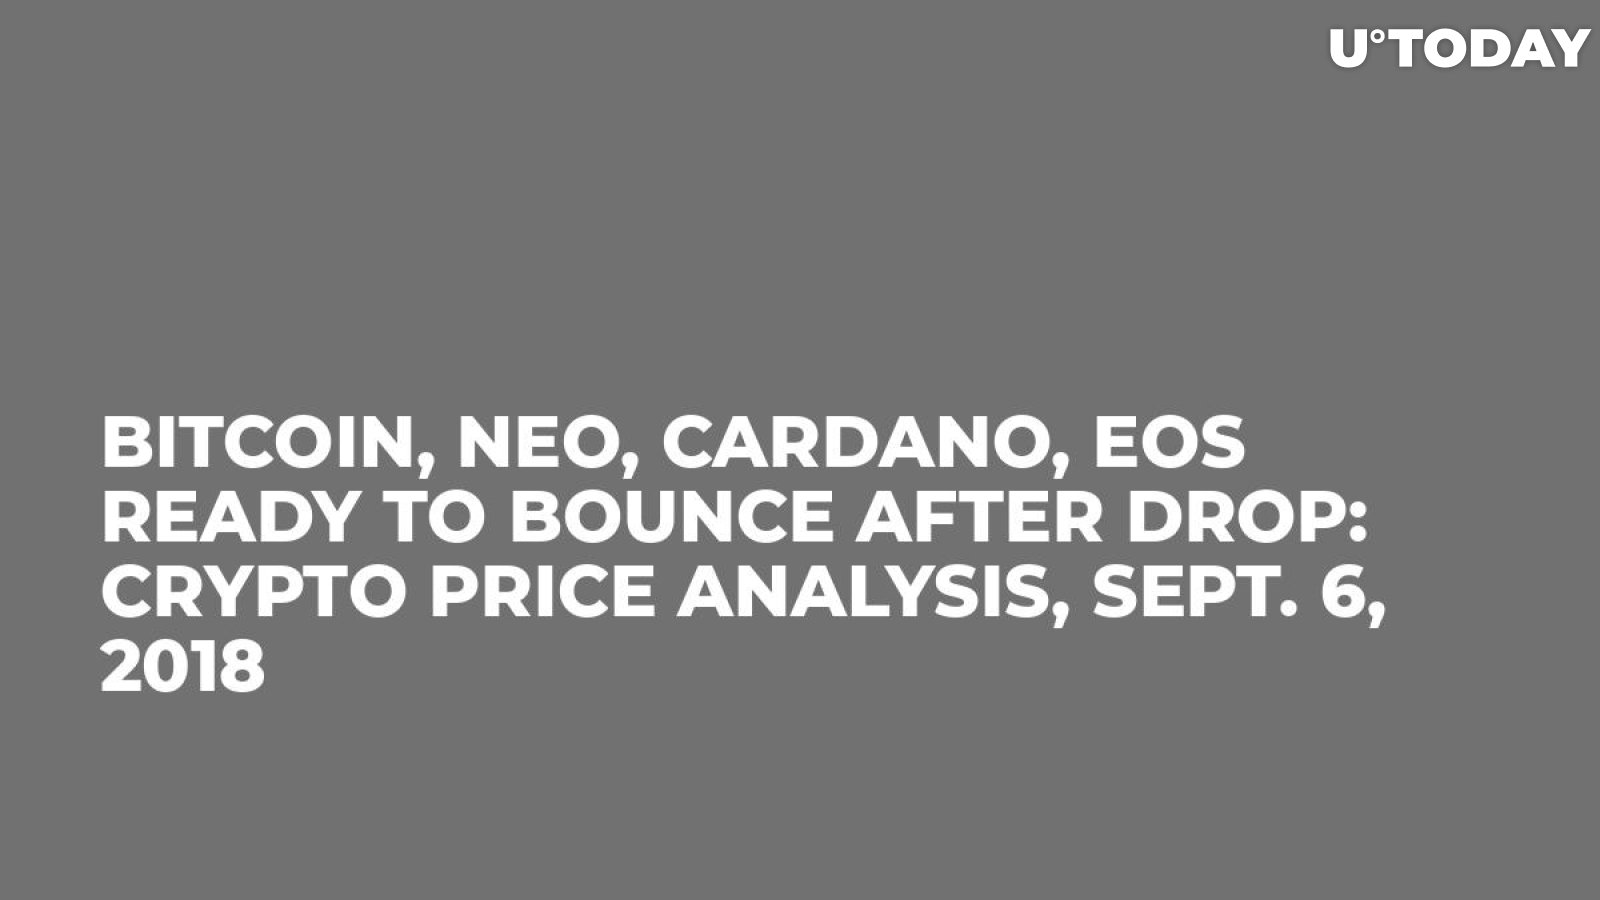 Bitcoin, NEO, Cardano, EOS Ready to Bounce After Drop: Crypto Price Analysis, Sept. 6, 2018